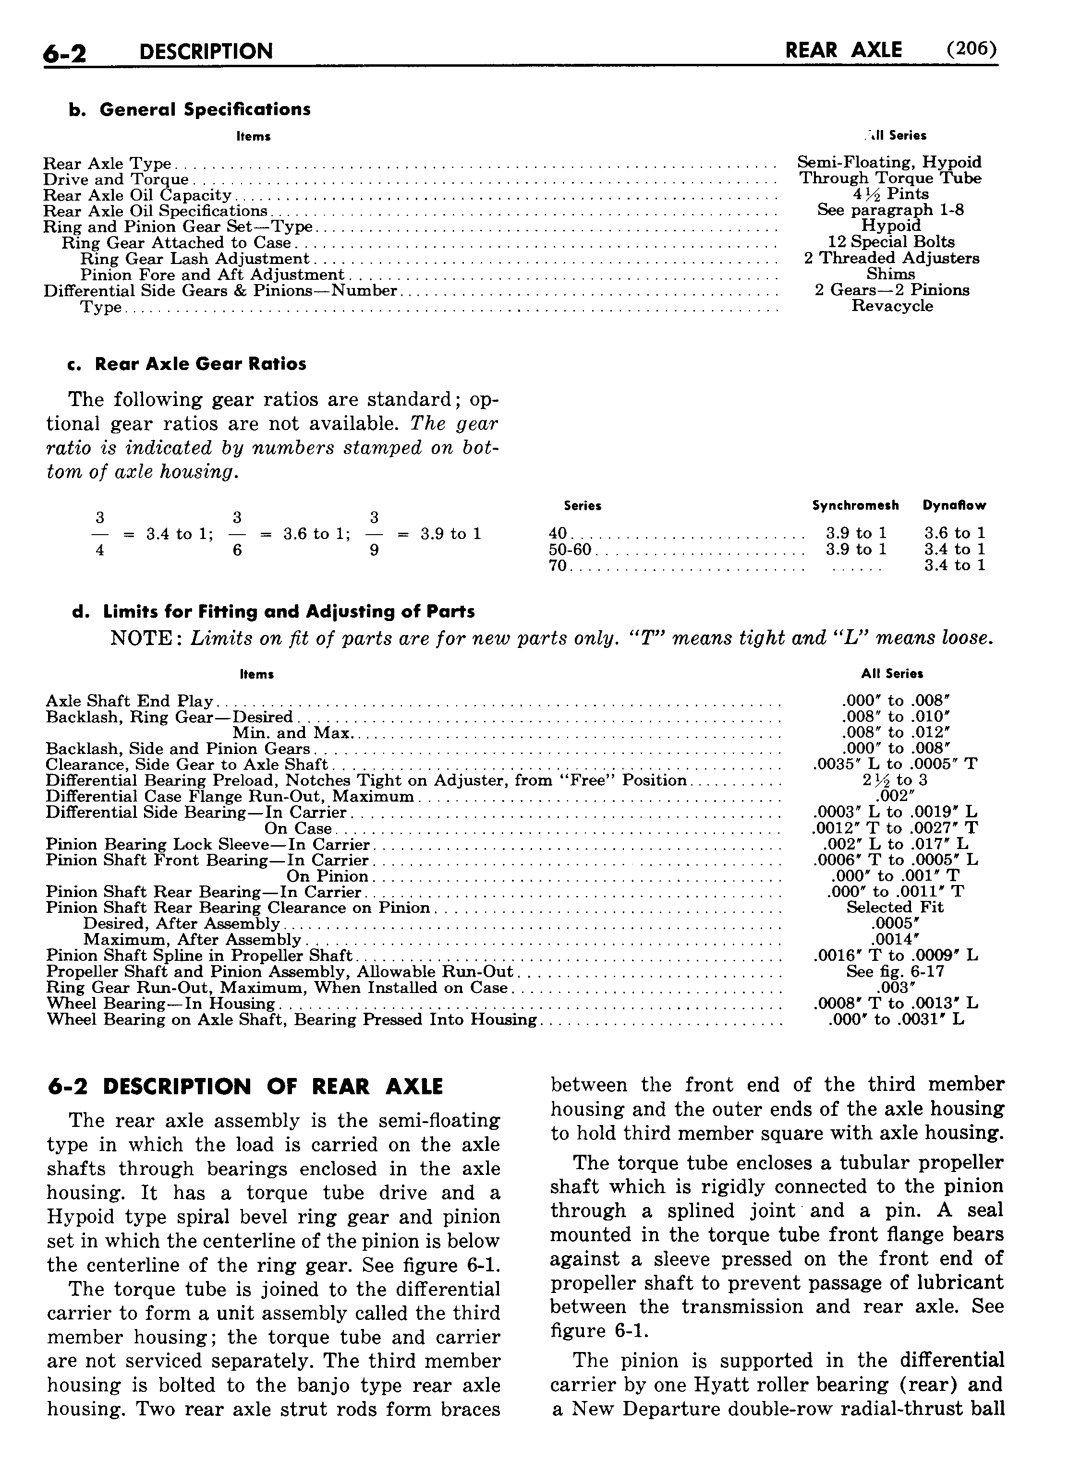 n_07 1955 Buick Shop Manual - Rear Axle-002-002.jpg